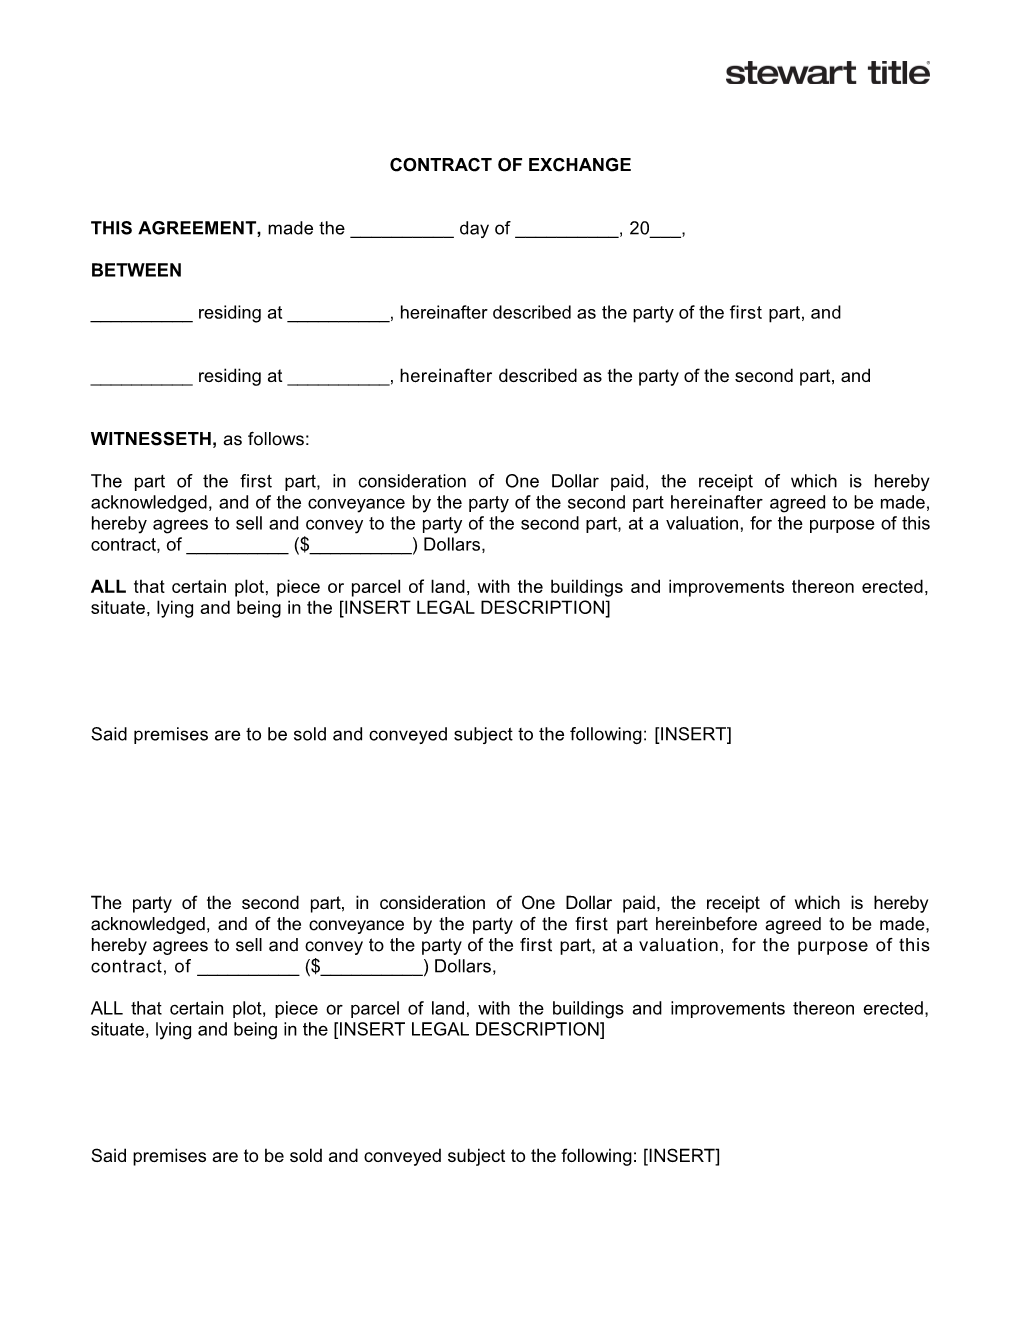 Contract of Exchange